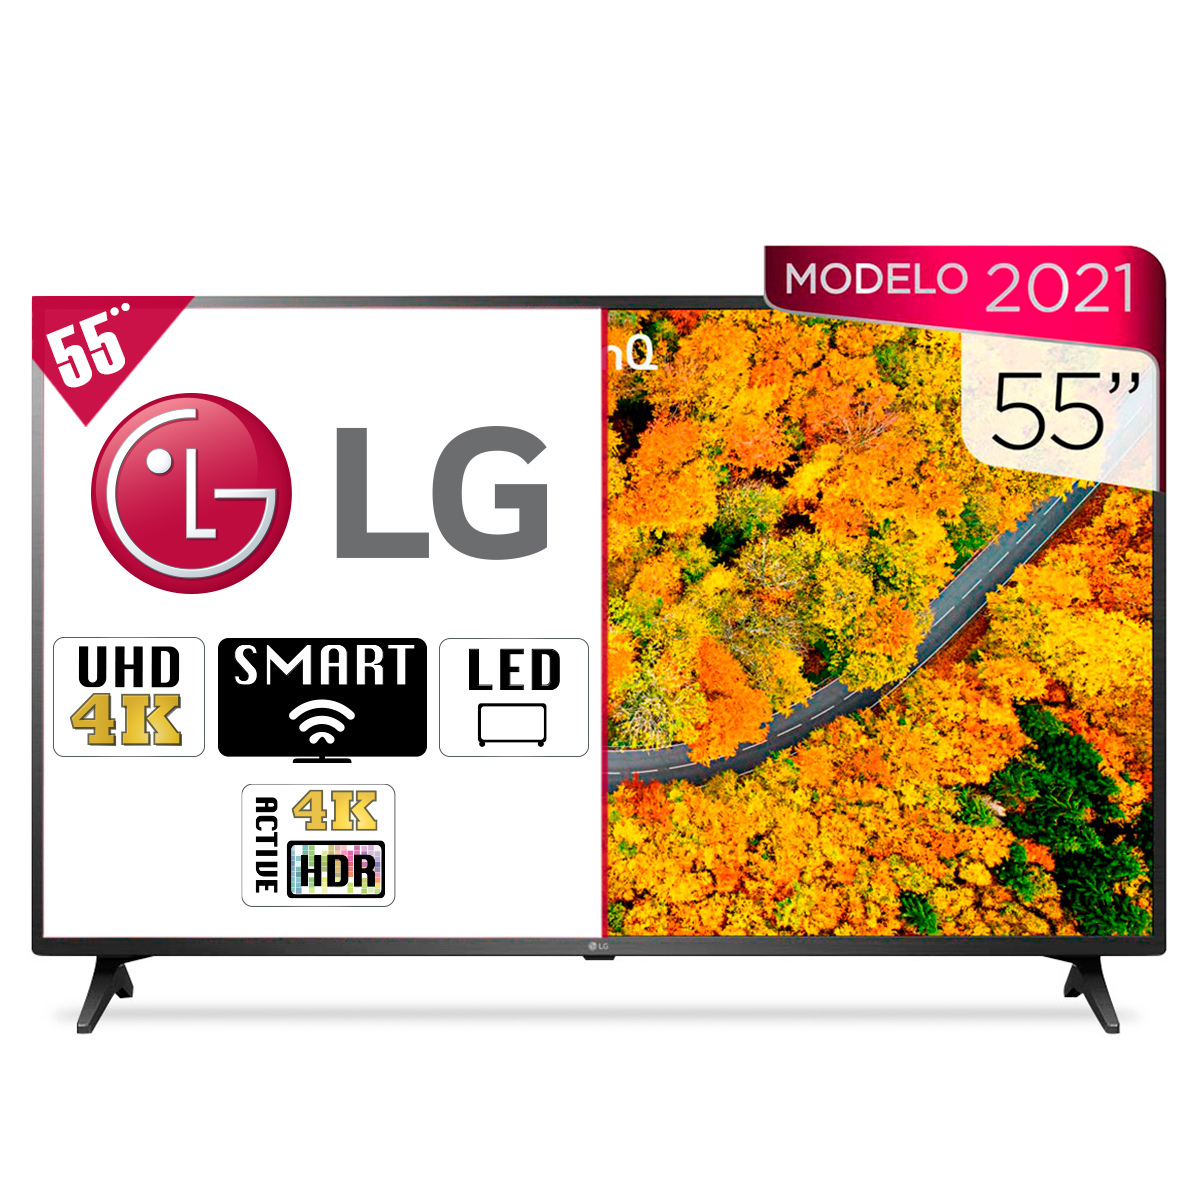 Pantalla TV LG 55UP7500PSF / Inteligencia Artificial ThinQ / 4K Ultra HD / 55 Pulg. / Smart TV / Led / HDR / Ultra Surround / HDMI / USB